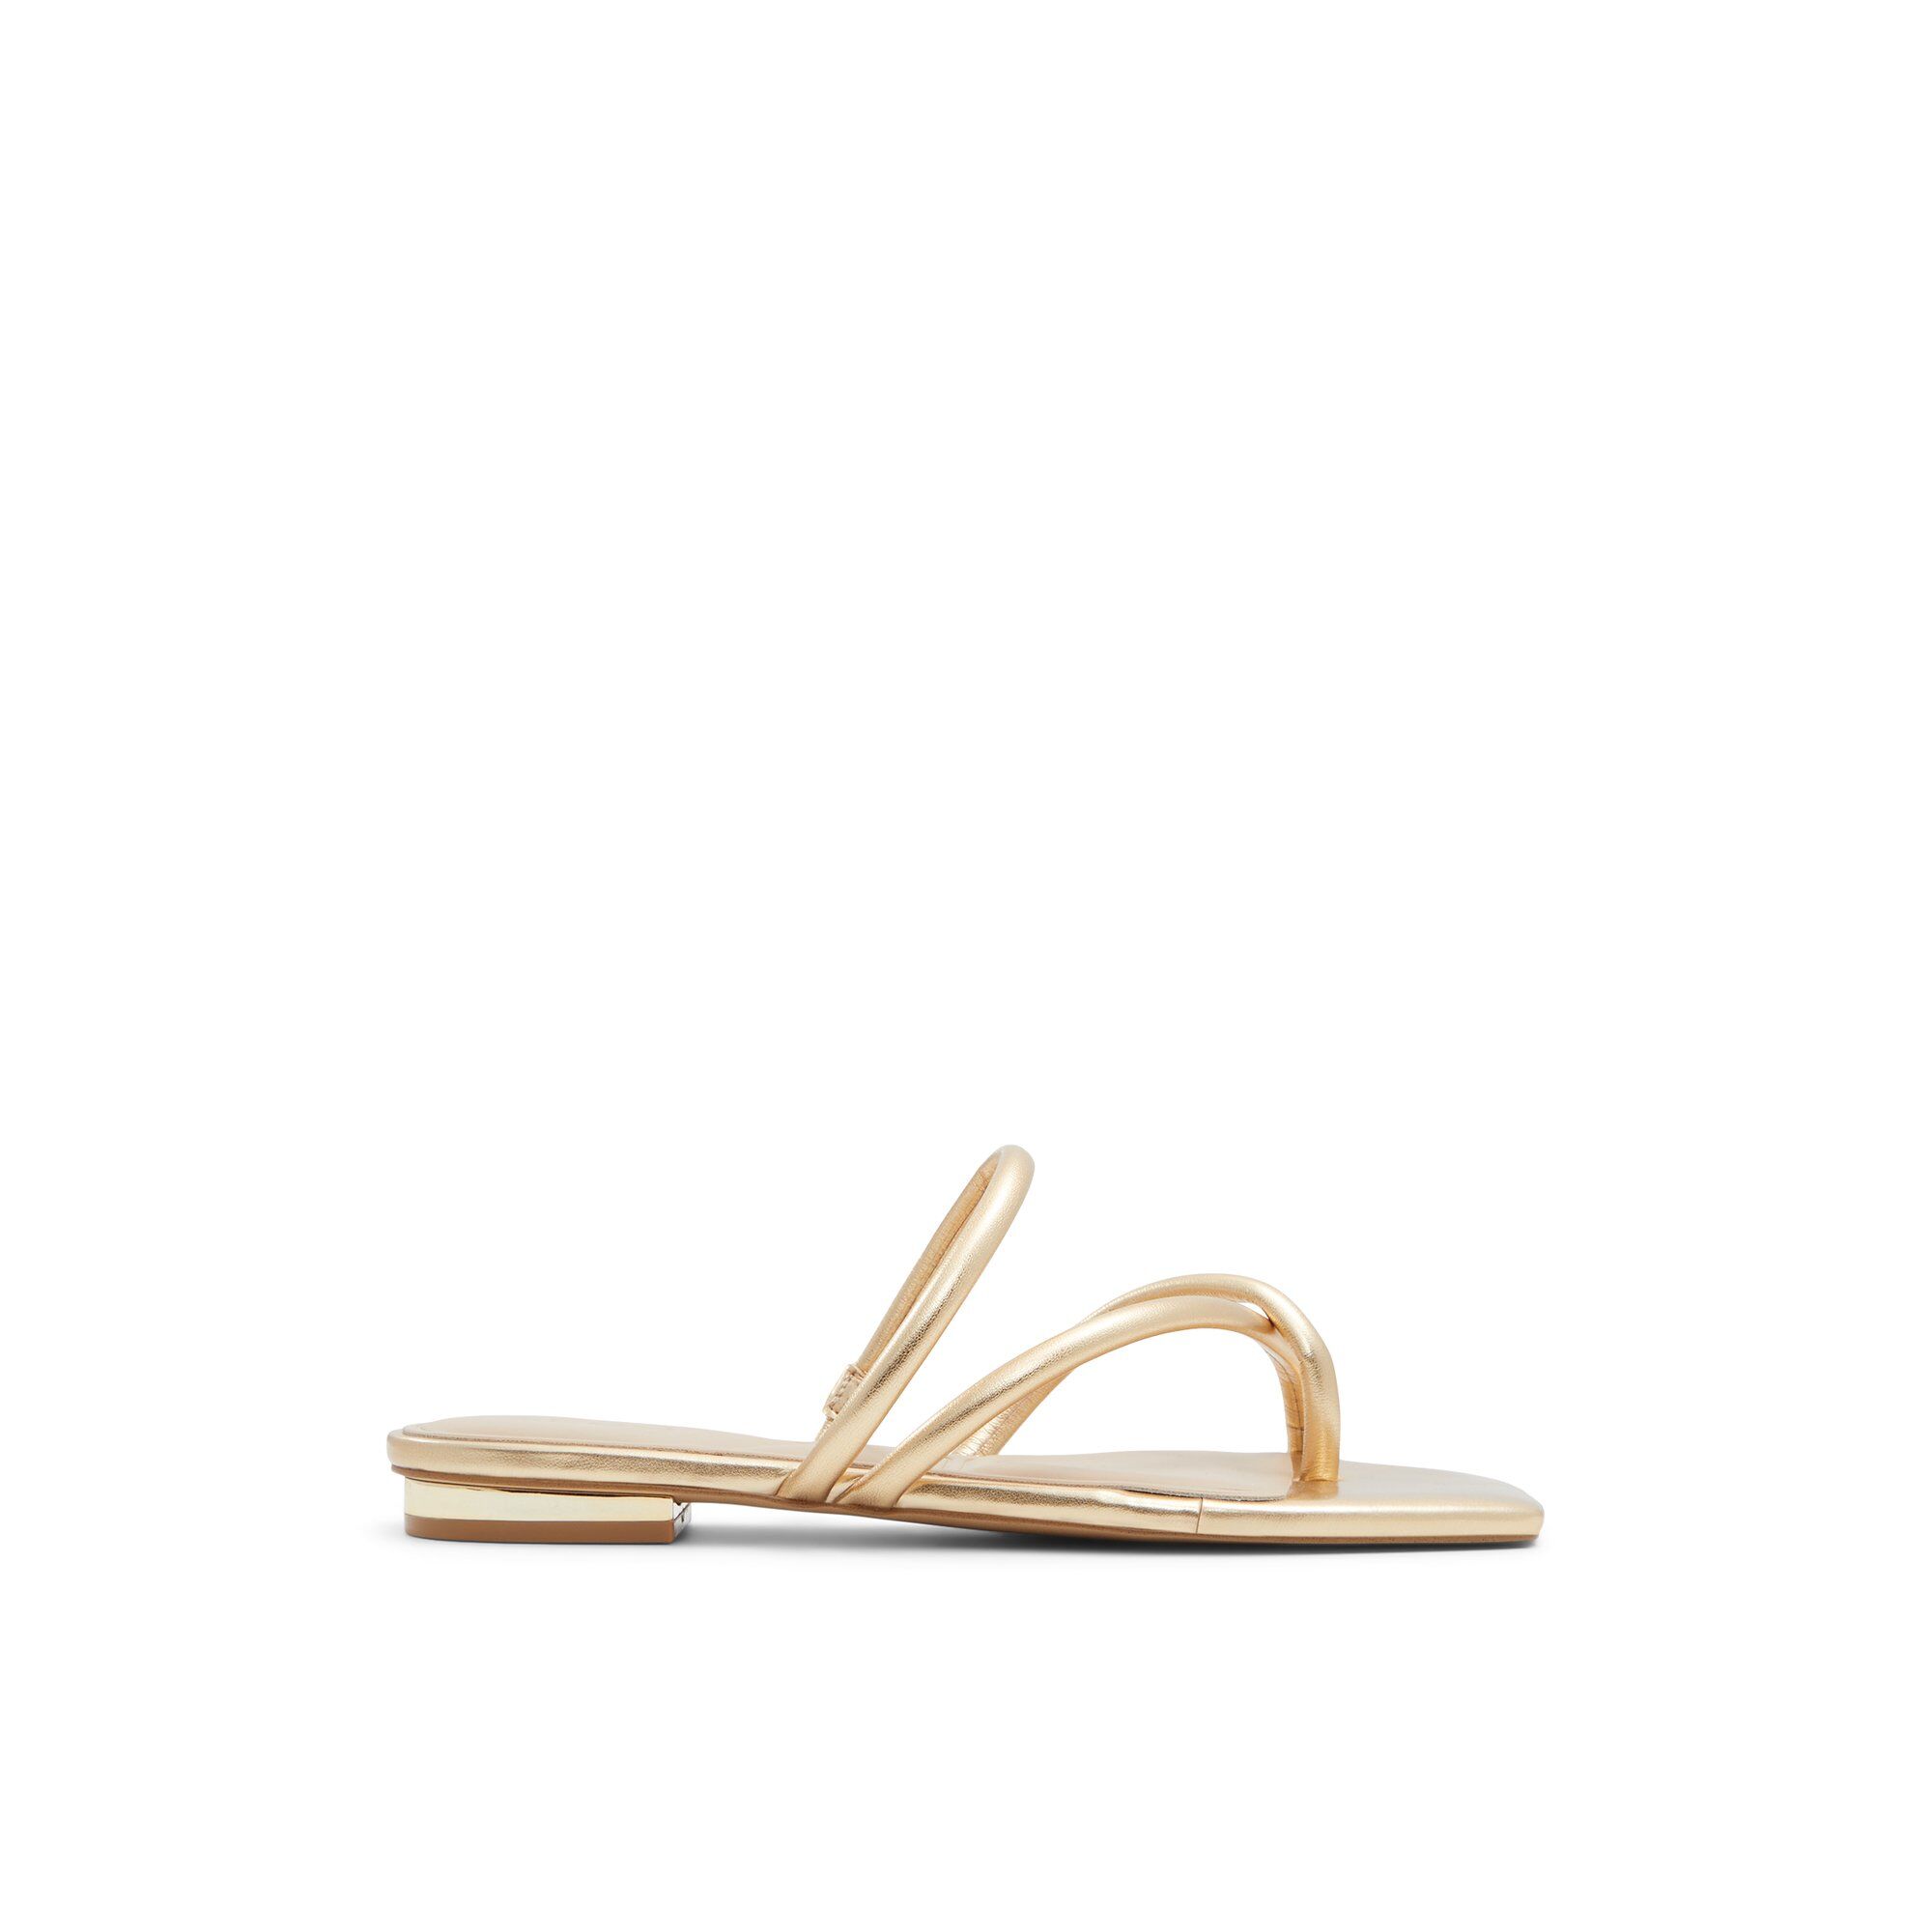 ALDO Mounis - Women's Flat Sandals - Gold, Size 7.5